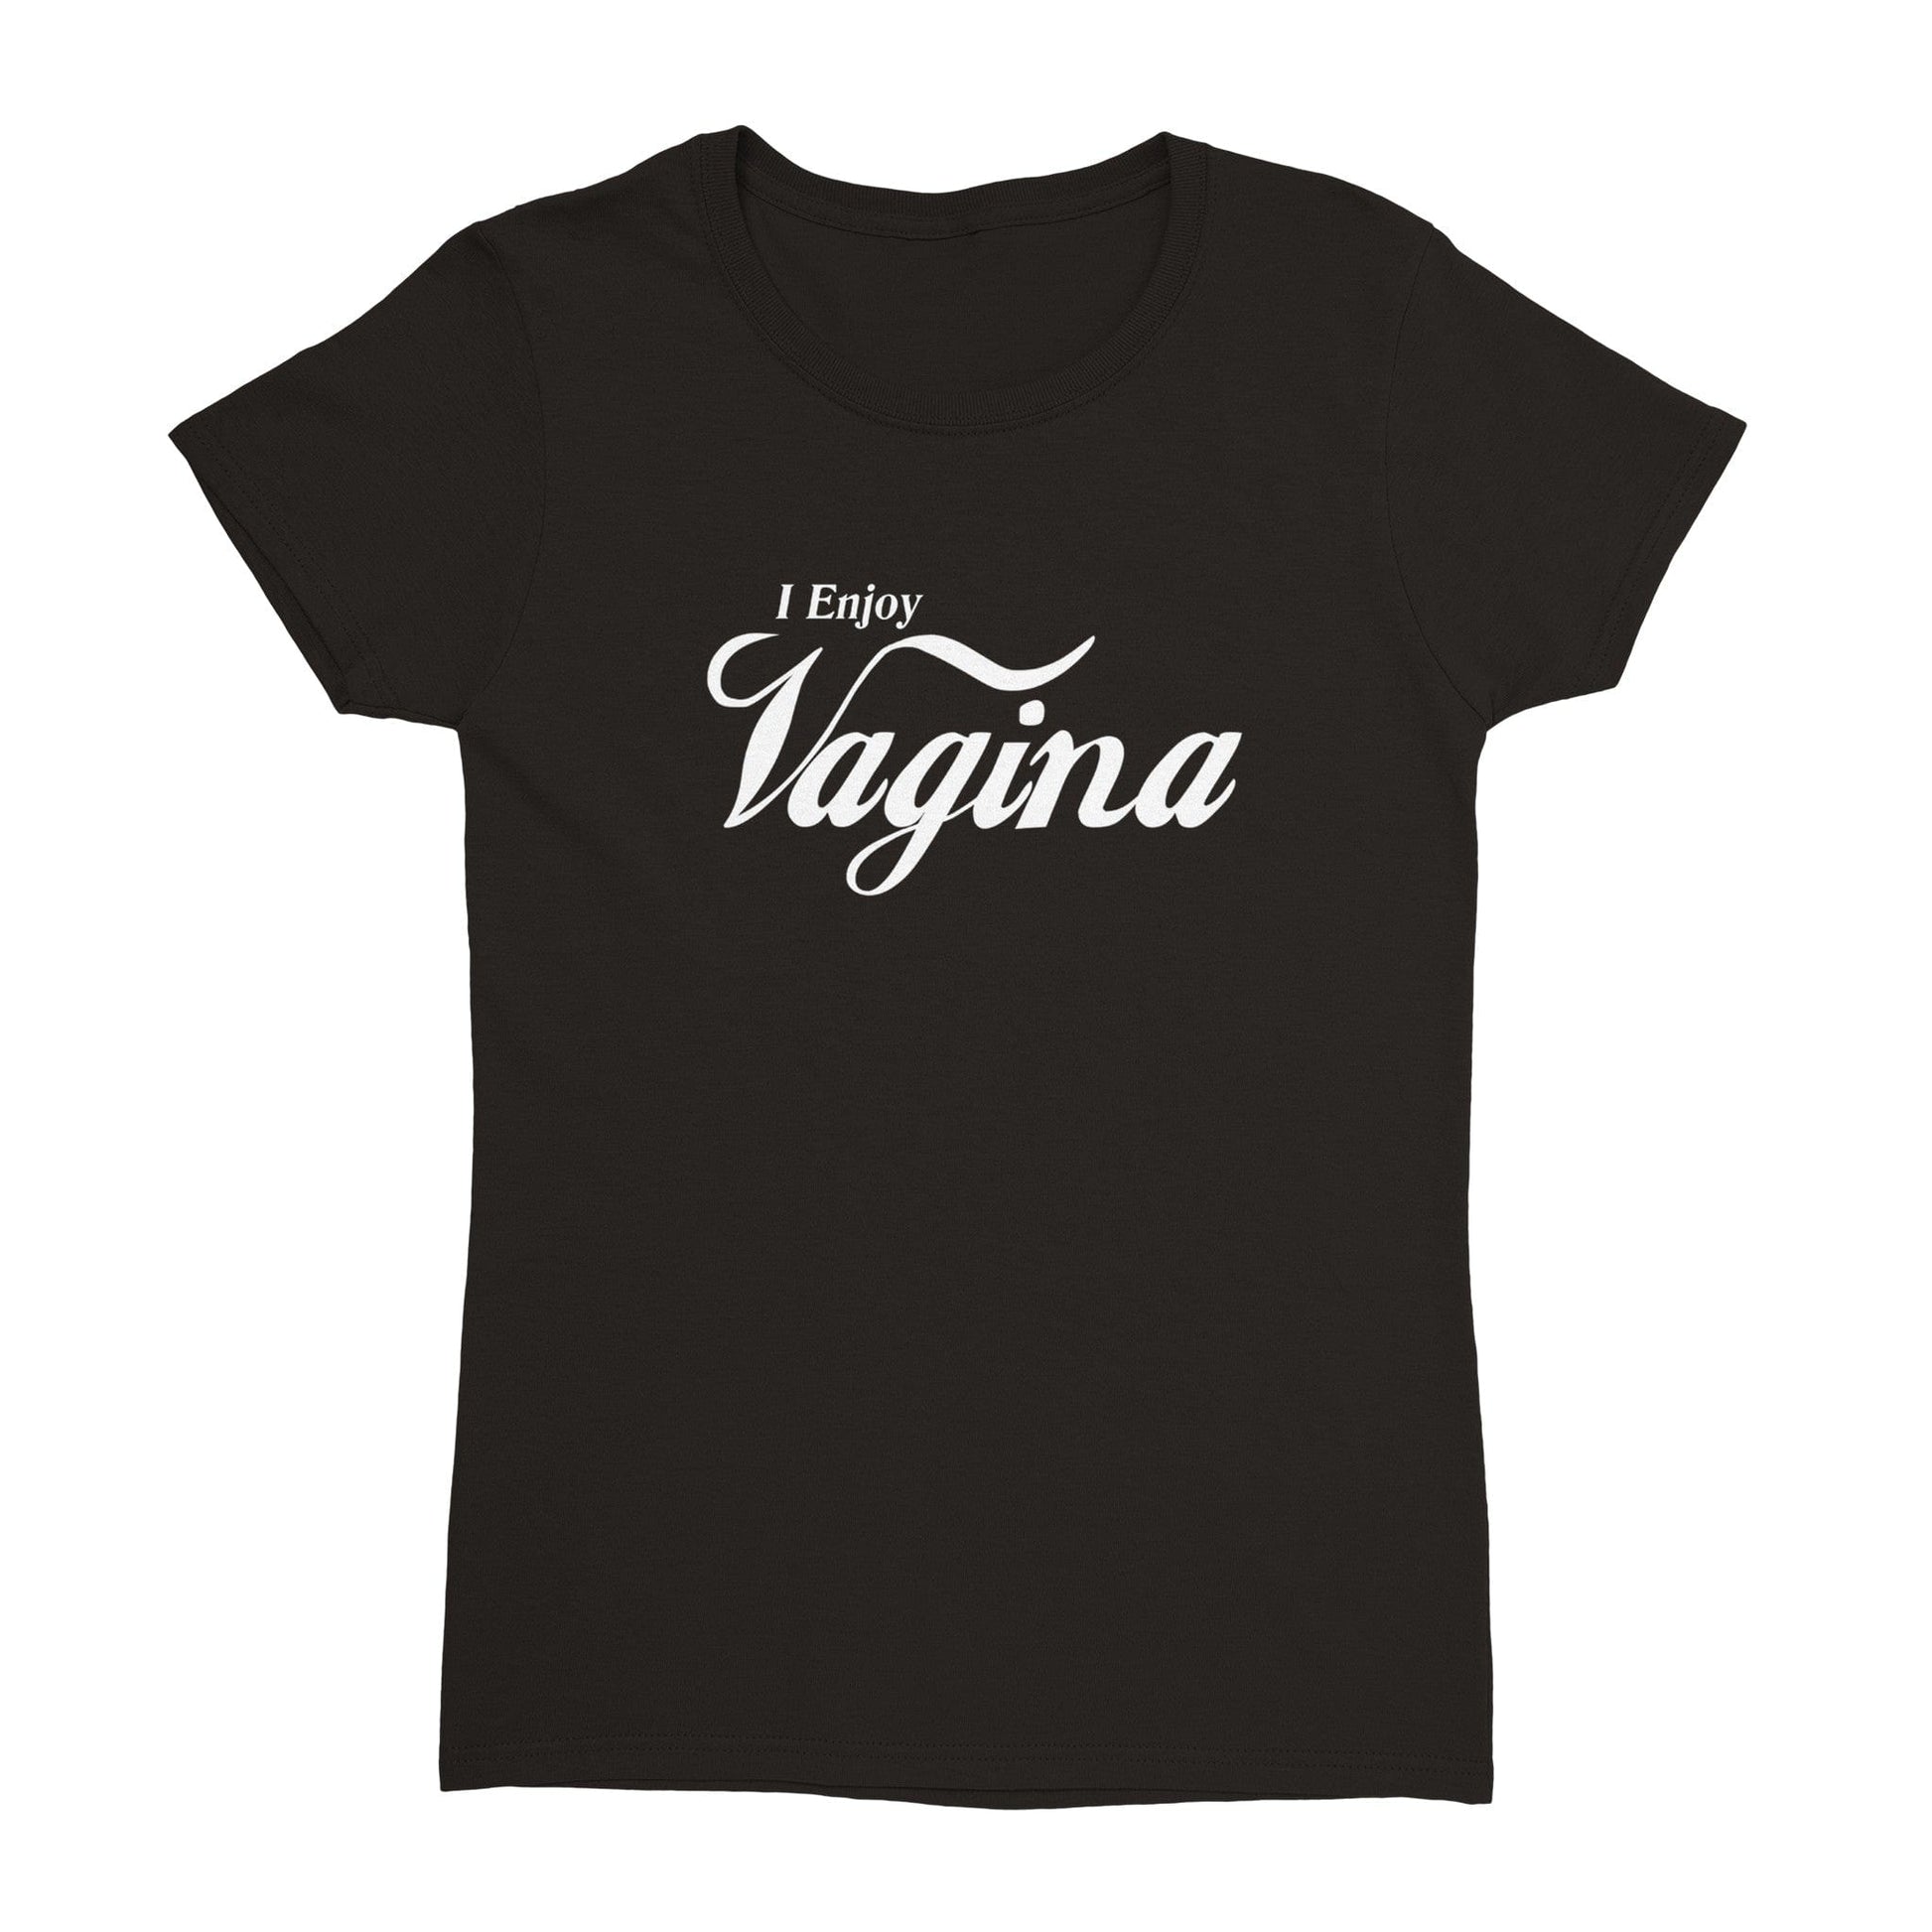 I Enjoy Vagina Coke T-Shirt Australia Online Color Black / Womens / S